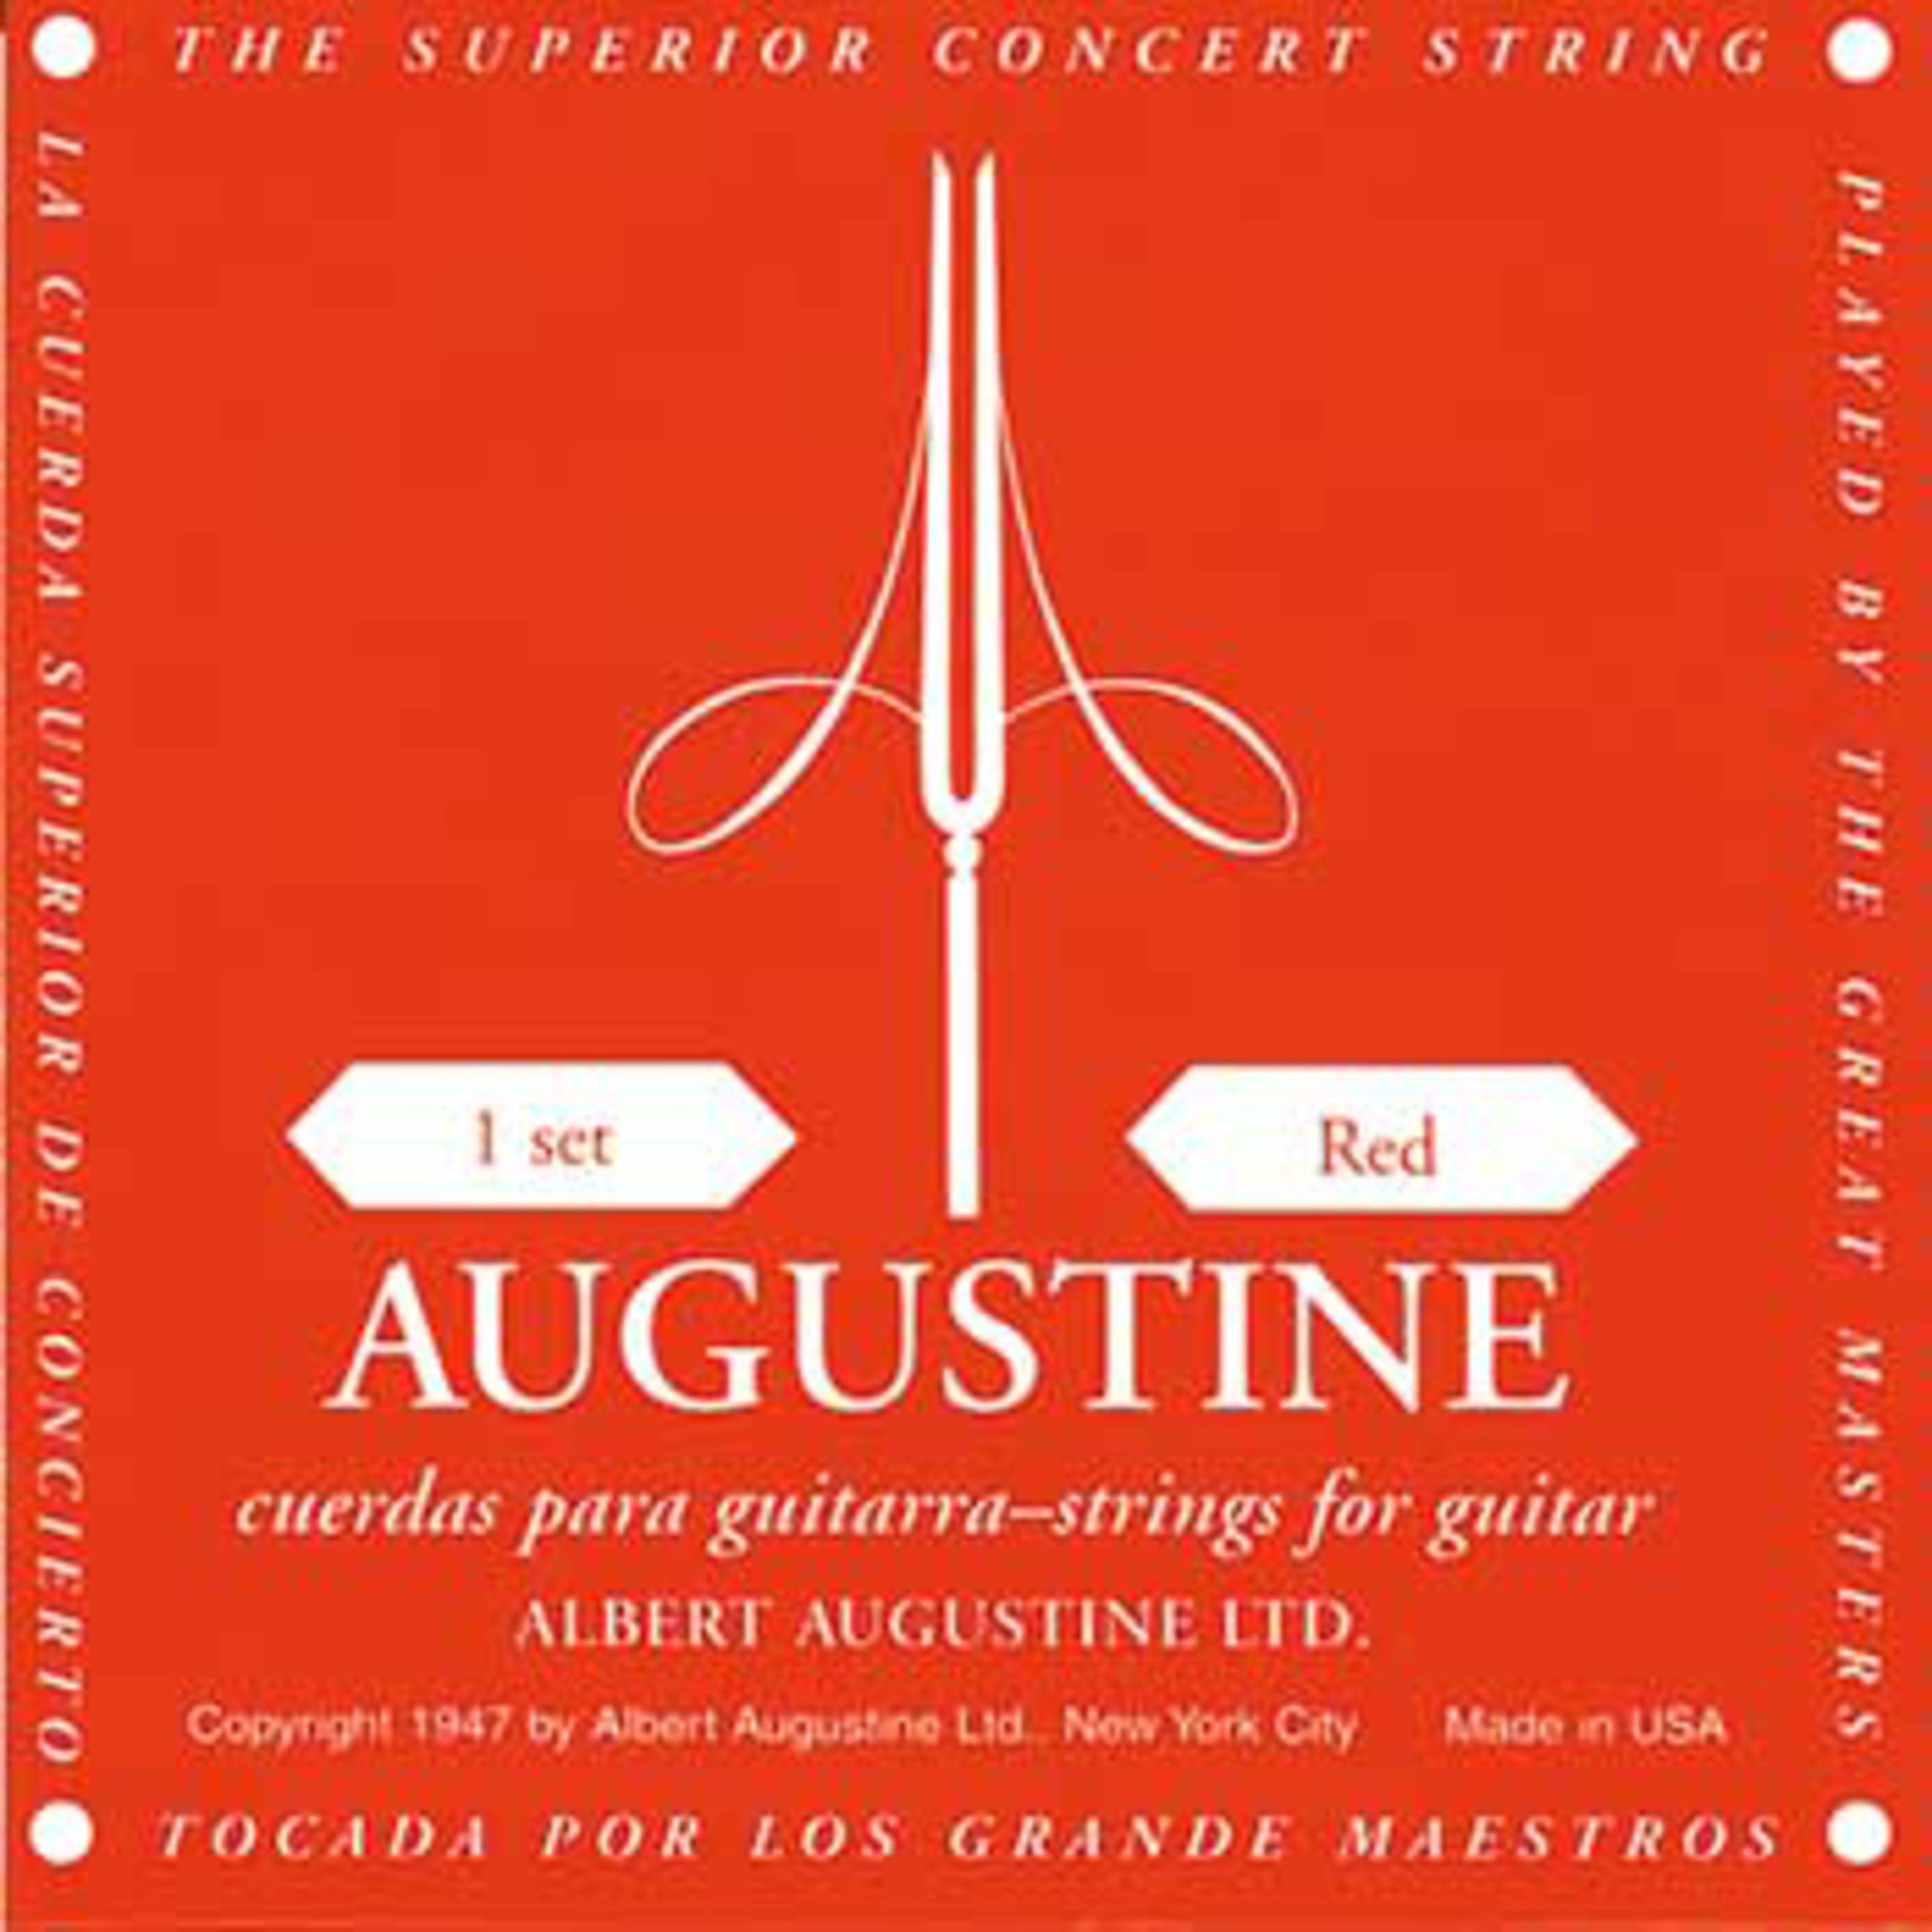 Augustine Classical Guitar Strings - Medium, 1 Set, Red